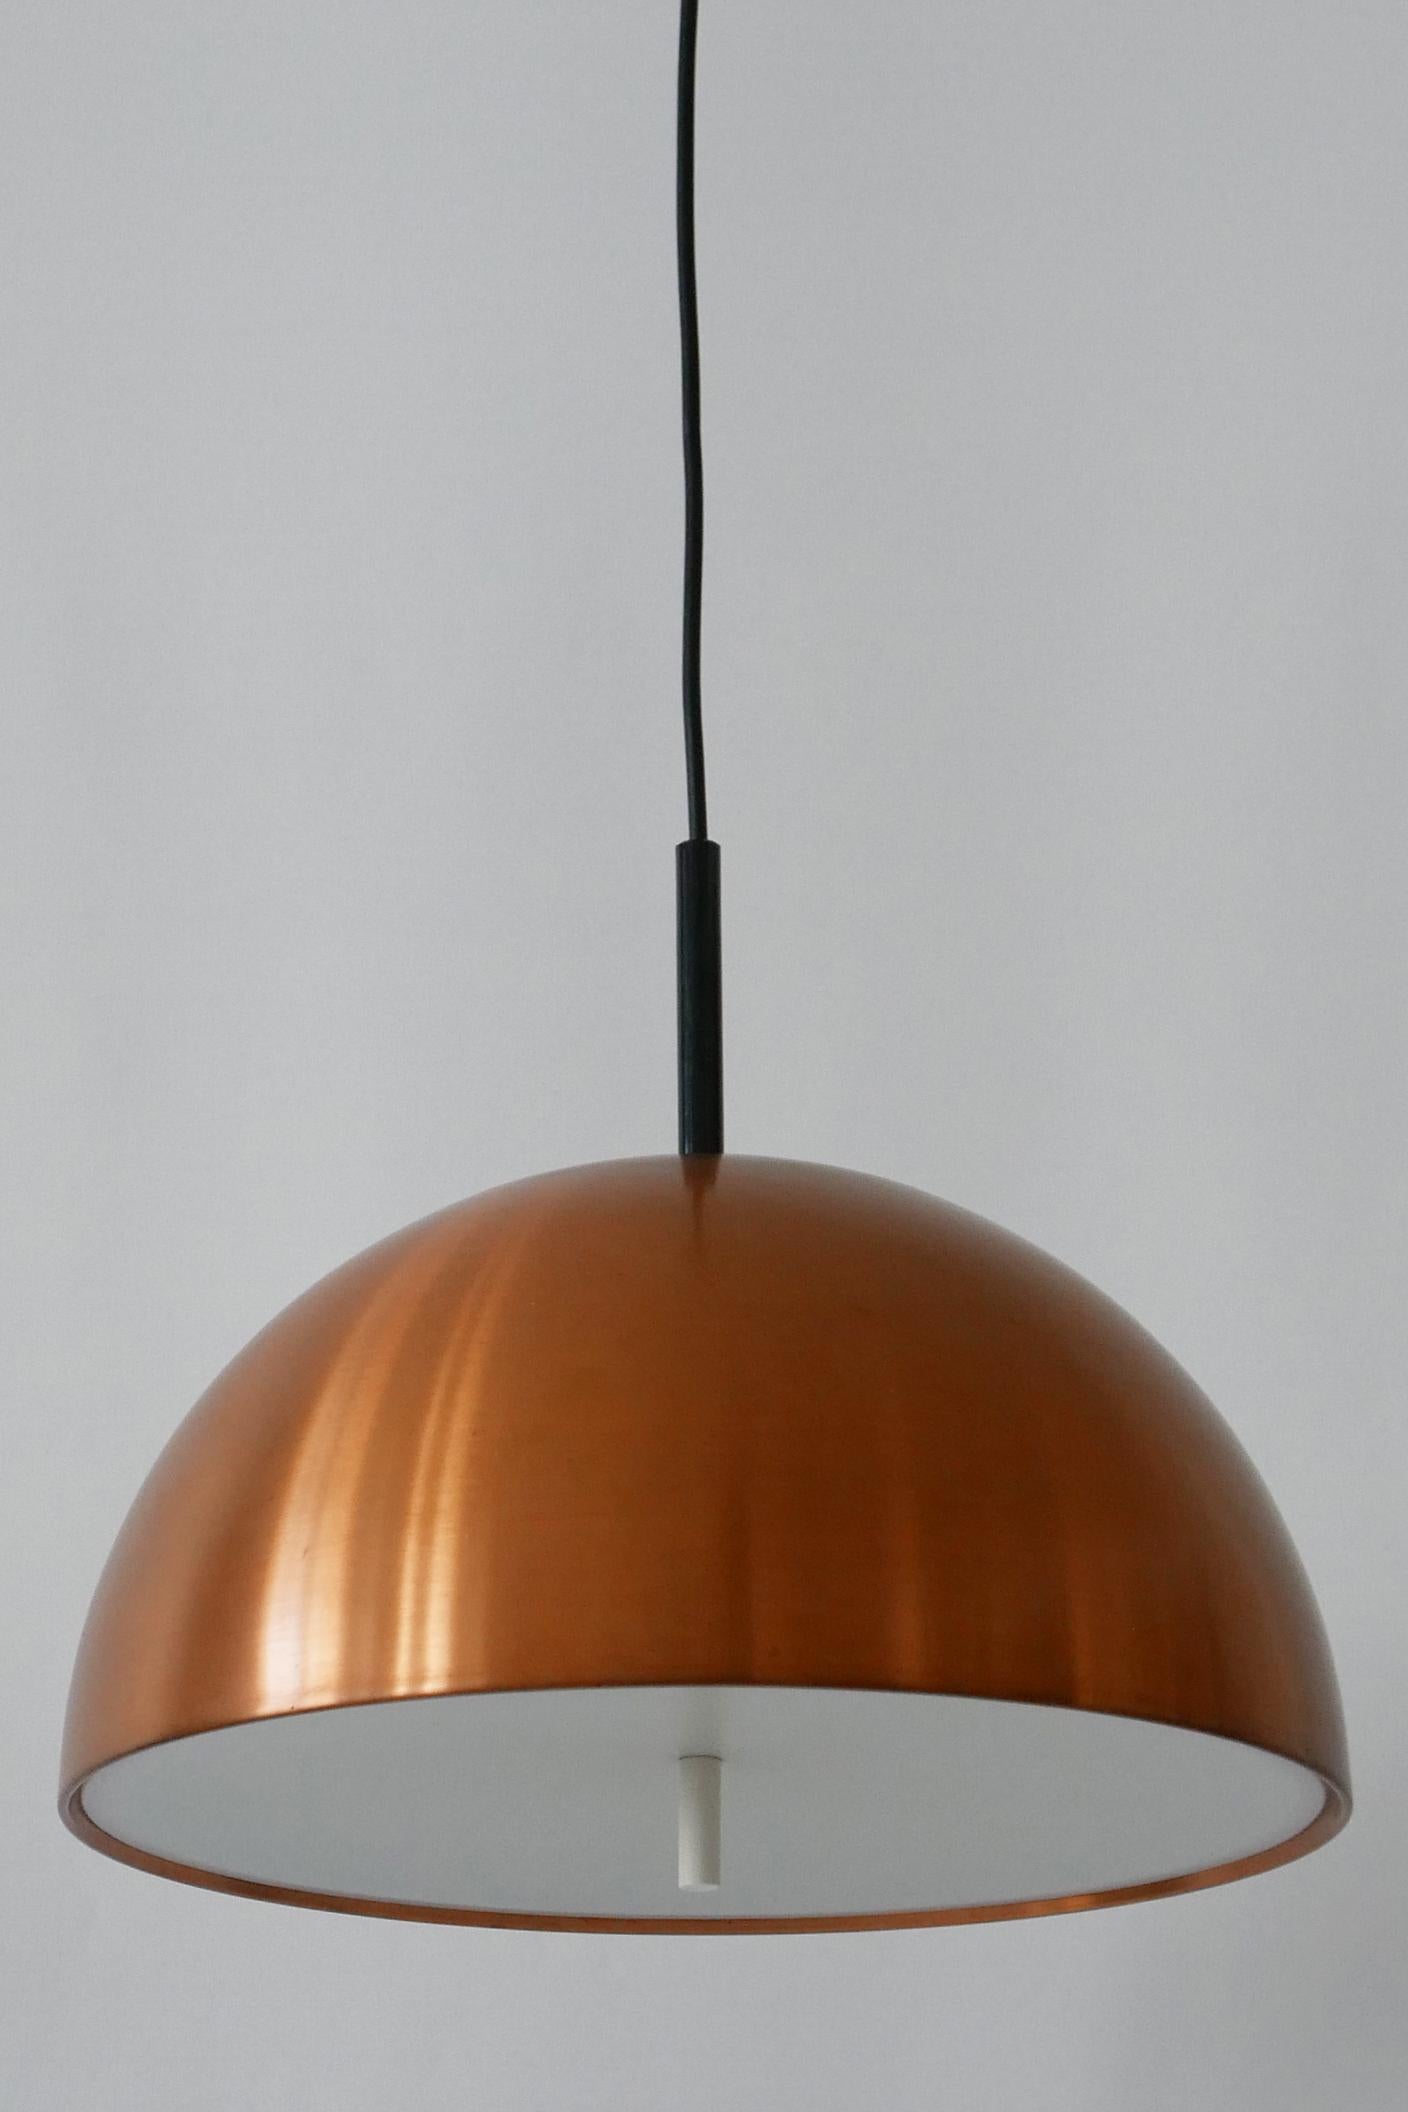 Elegant Mid-Century Modern Copper Pendant Lamp by Staff & Schwarz 1960s, Germany For Sale 8